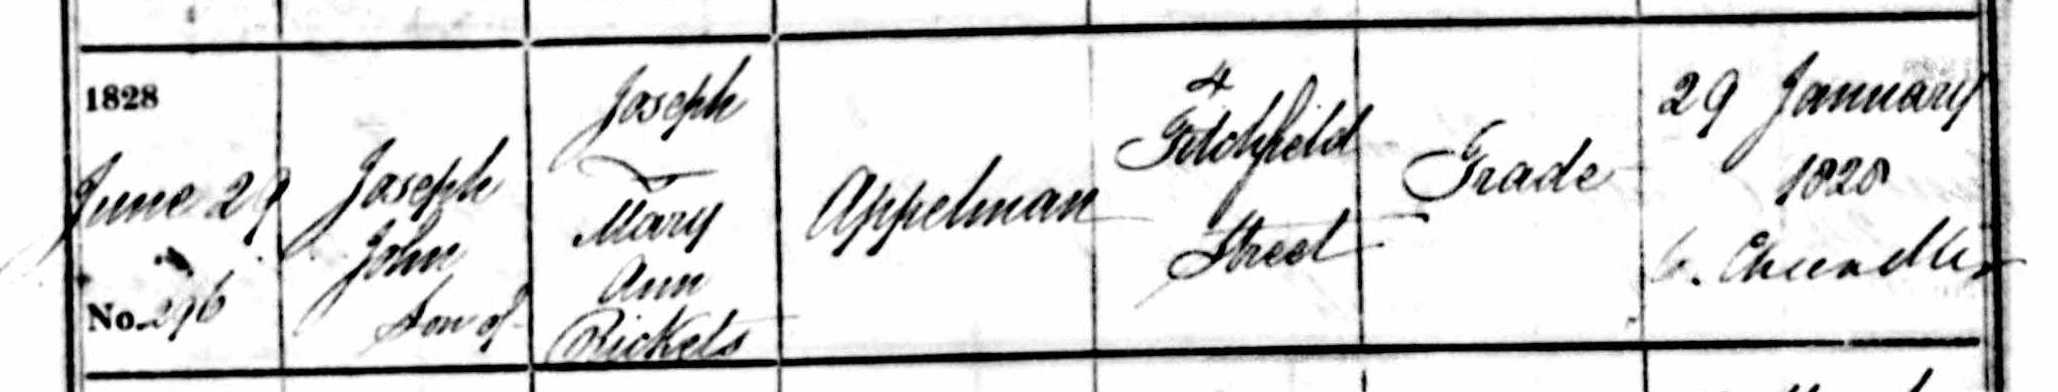 Joseph John APPELMAN baptised 1828